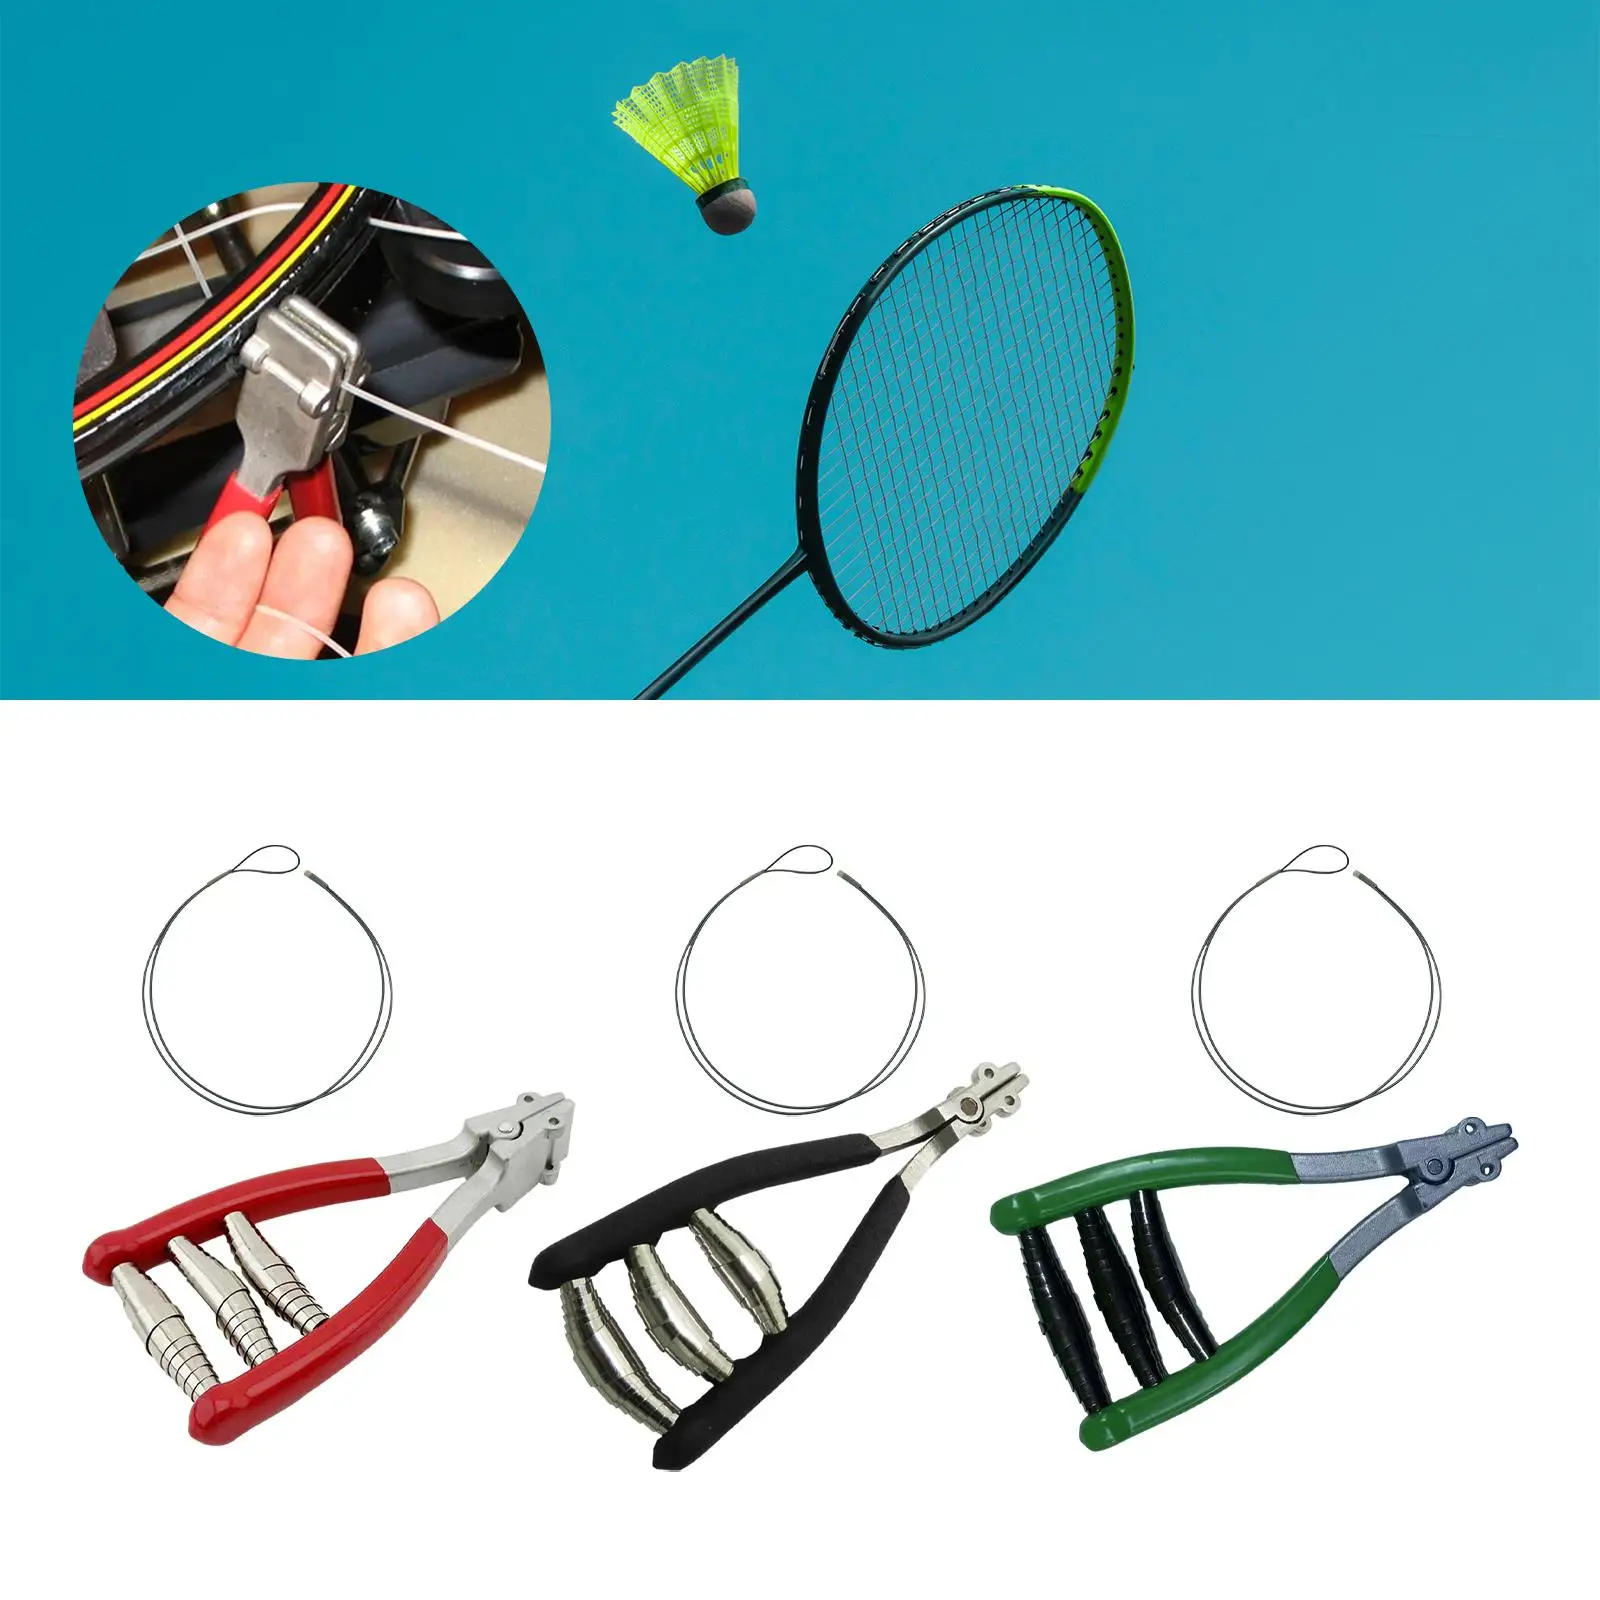 Starting Clamp Stringing Clamp Manual 3 Spring Tennis Equipment Stringing Tool for Tennis Racquet Badminton Squash Accessories